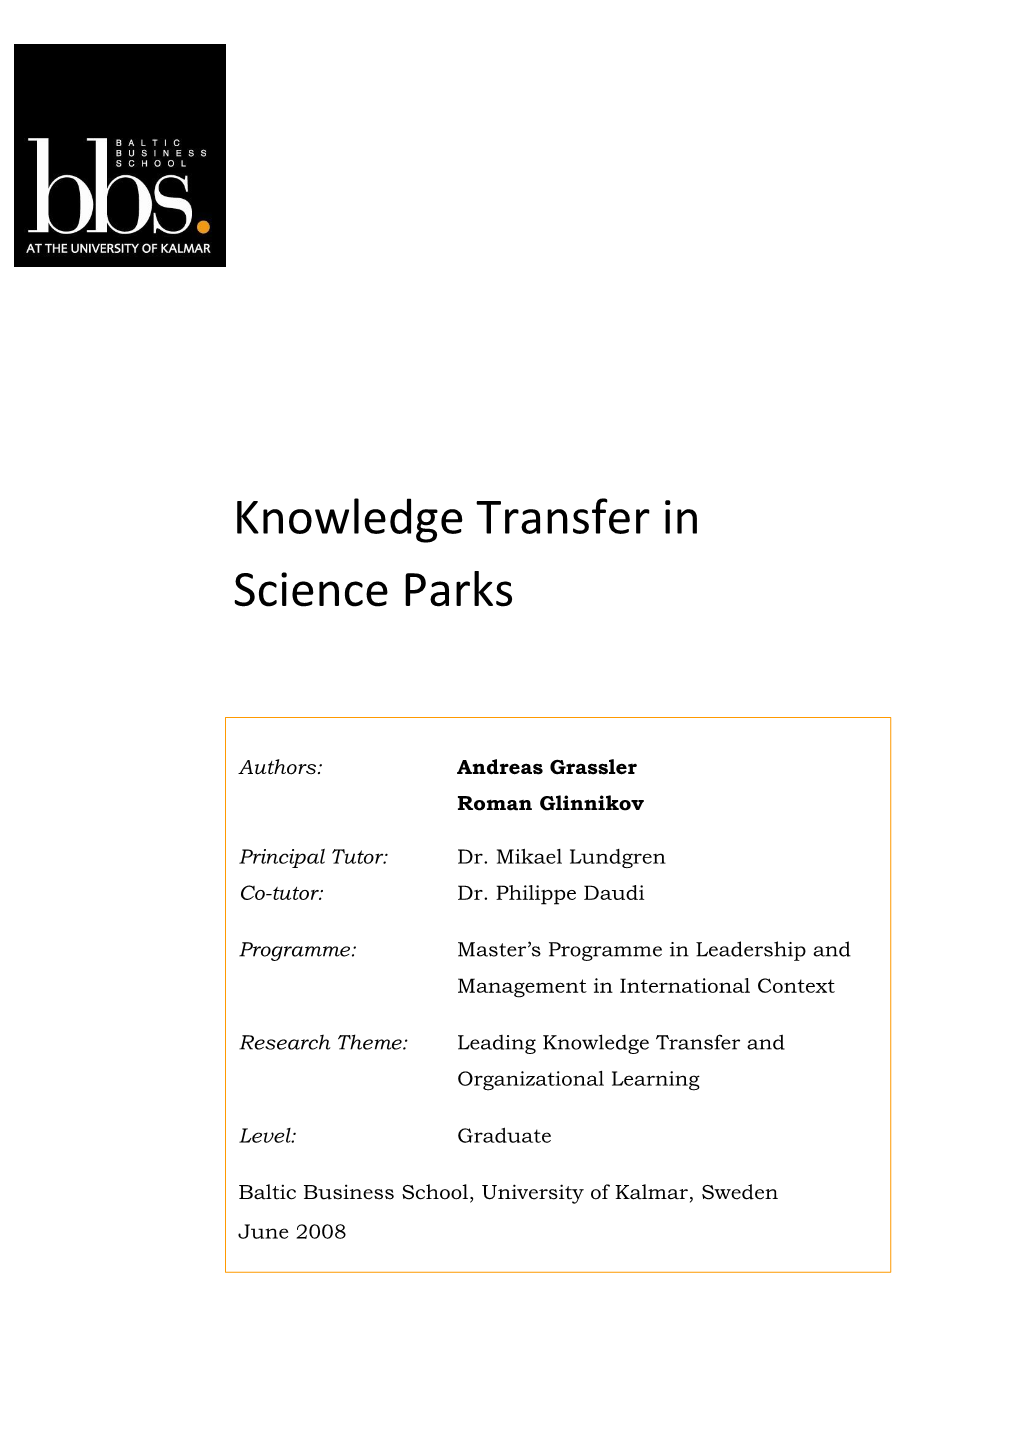 Knowledge Transfer in Science Parks